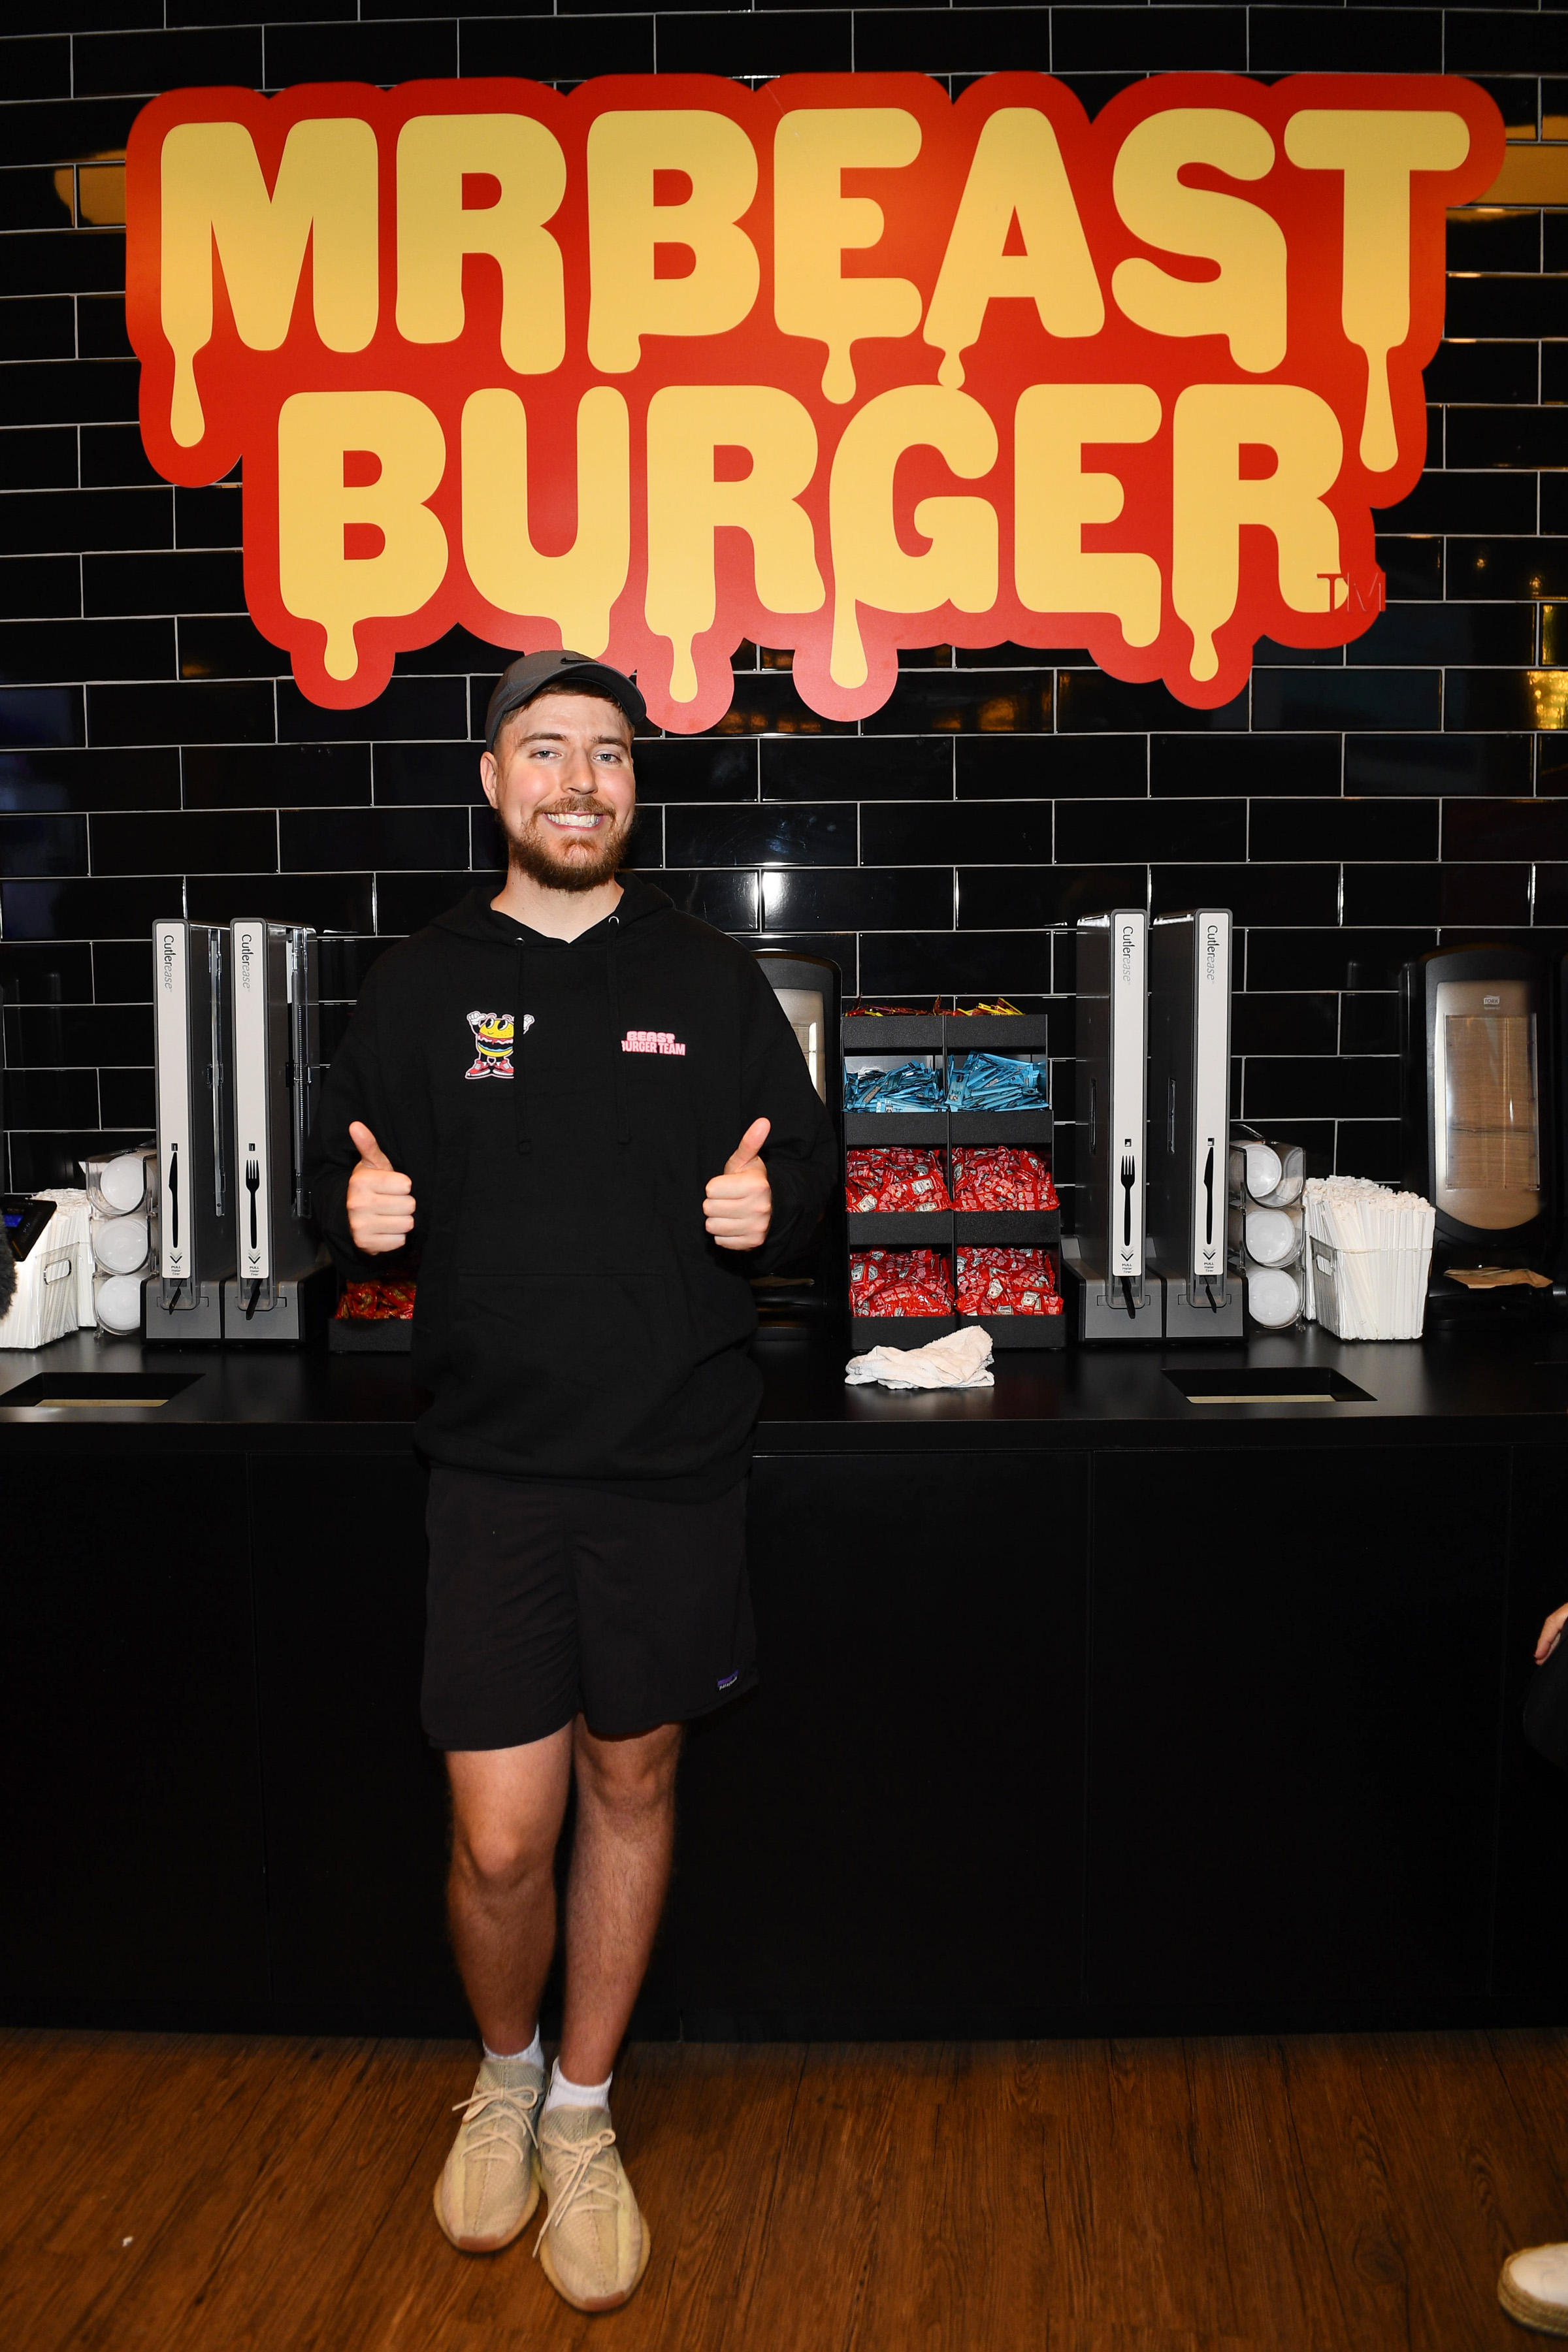 Global YouTube Star MrBeast Launches First Physical MrBeast Burger Restaurant At American Dream